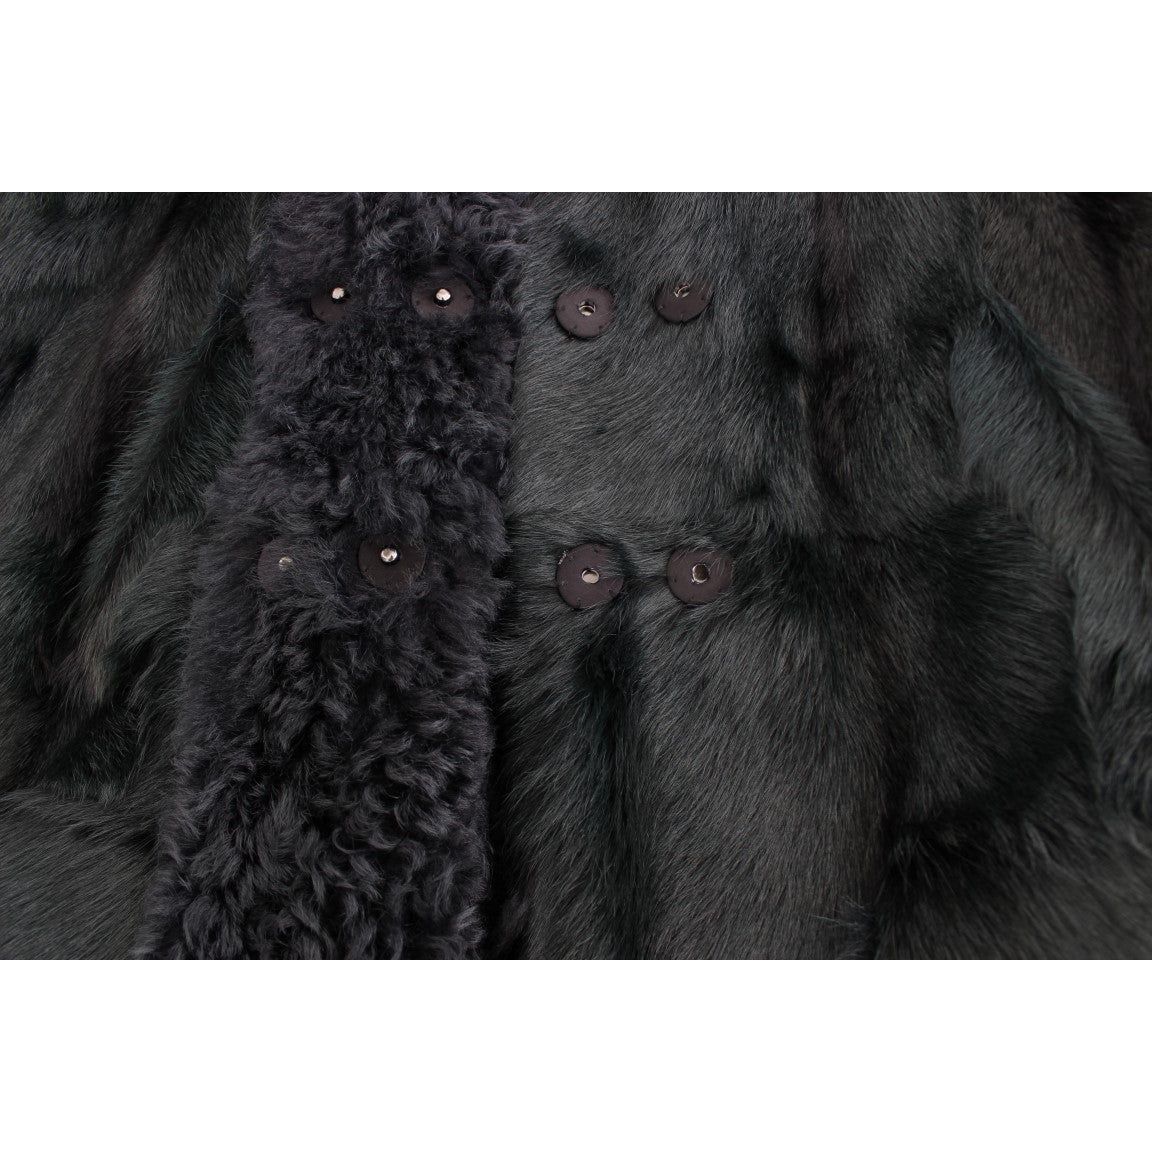 Dolce & Gabbana Exquisite Shearling Coat Jacket black-goat-fur-shearling-long-jacket-coat 62390-black-goat-fur-shearling-long-jacket-coat-9.jpg